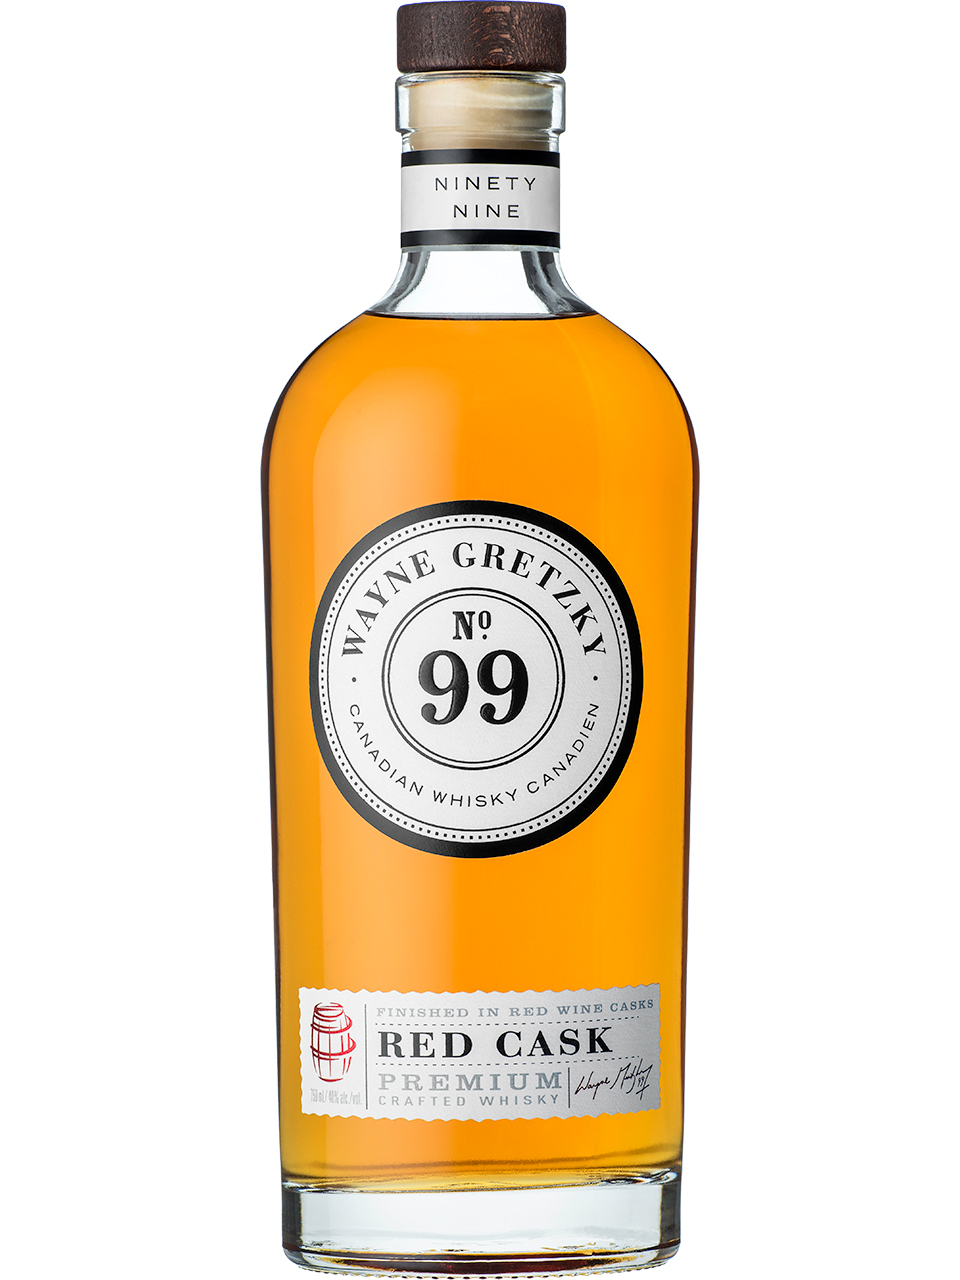 Wayne Gretzky No. 99 Red Cask Whisky